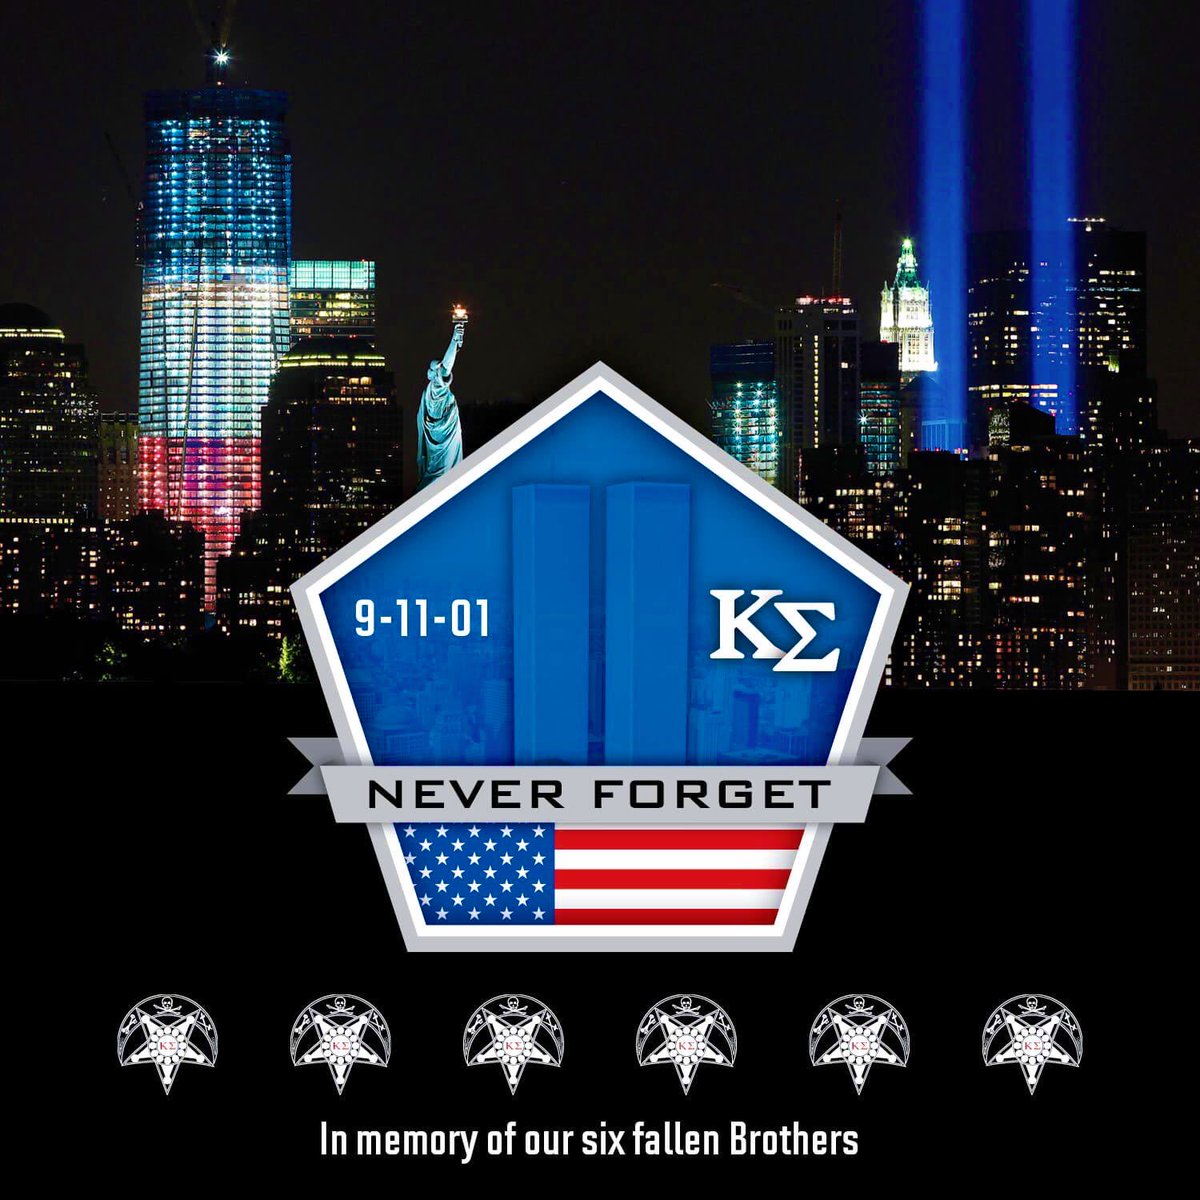 Today we honor all those lost on 9/11 including our 6 fallen Brothers. #NeverForget 🇺🇸Fredric N. Gabler (Alpha-Kappa) 🇺🇸Jeffrey B. Gardner (Gamma-Upsilon) 🇺🇸Andrew H. Golkin (Delta-Phi) 🇺🇸Richard B. Madden (Gamma-Xi) 🇺🇸James R. Paul (Beta-Nu) 🇺🇸William P. Tselepis (Alpha-Gamma)